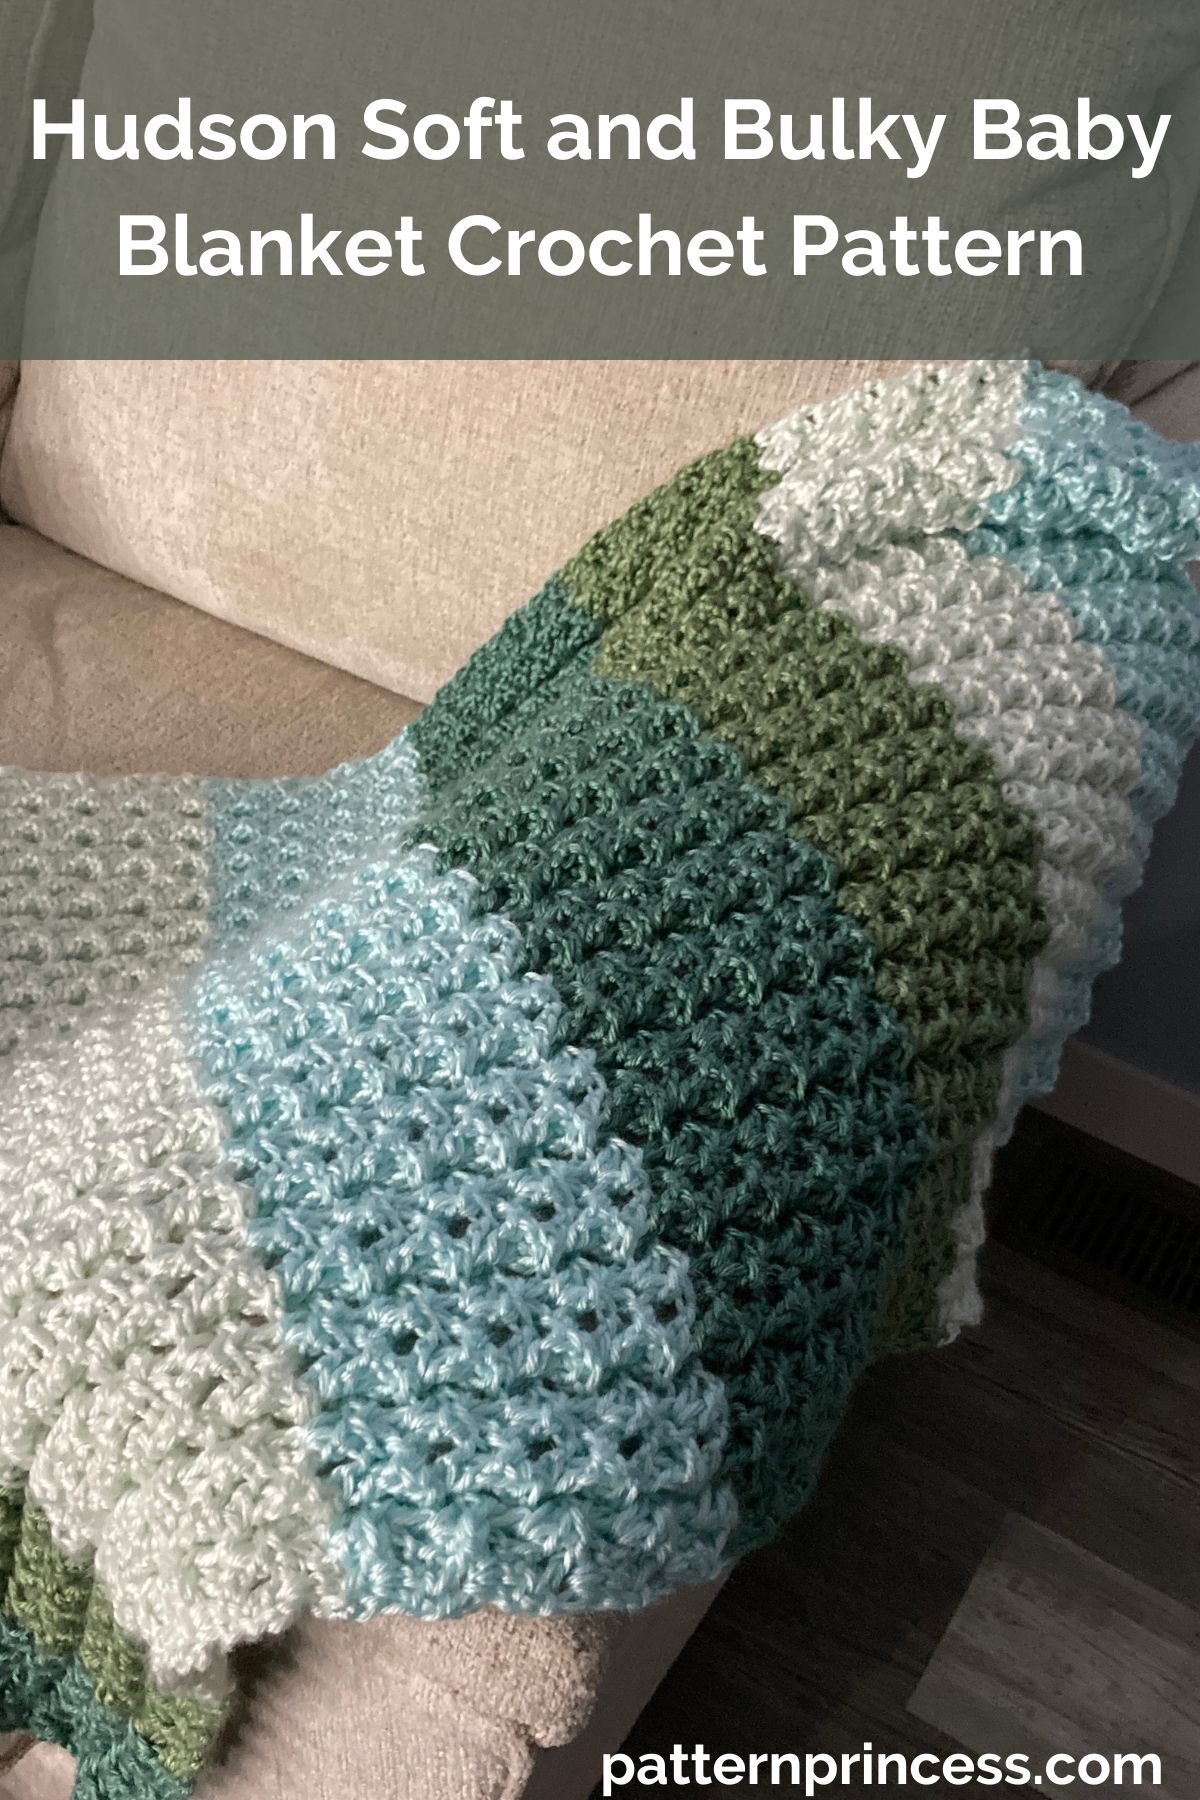 Hudson Soft and Bulky Baby Blanket Crochet Pattern